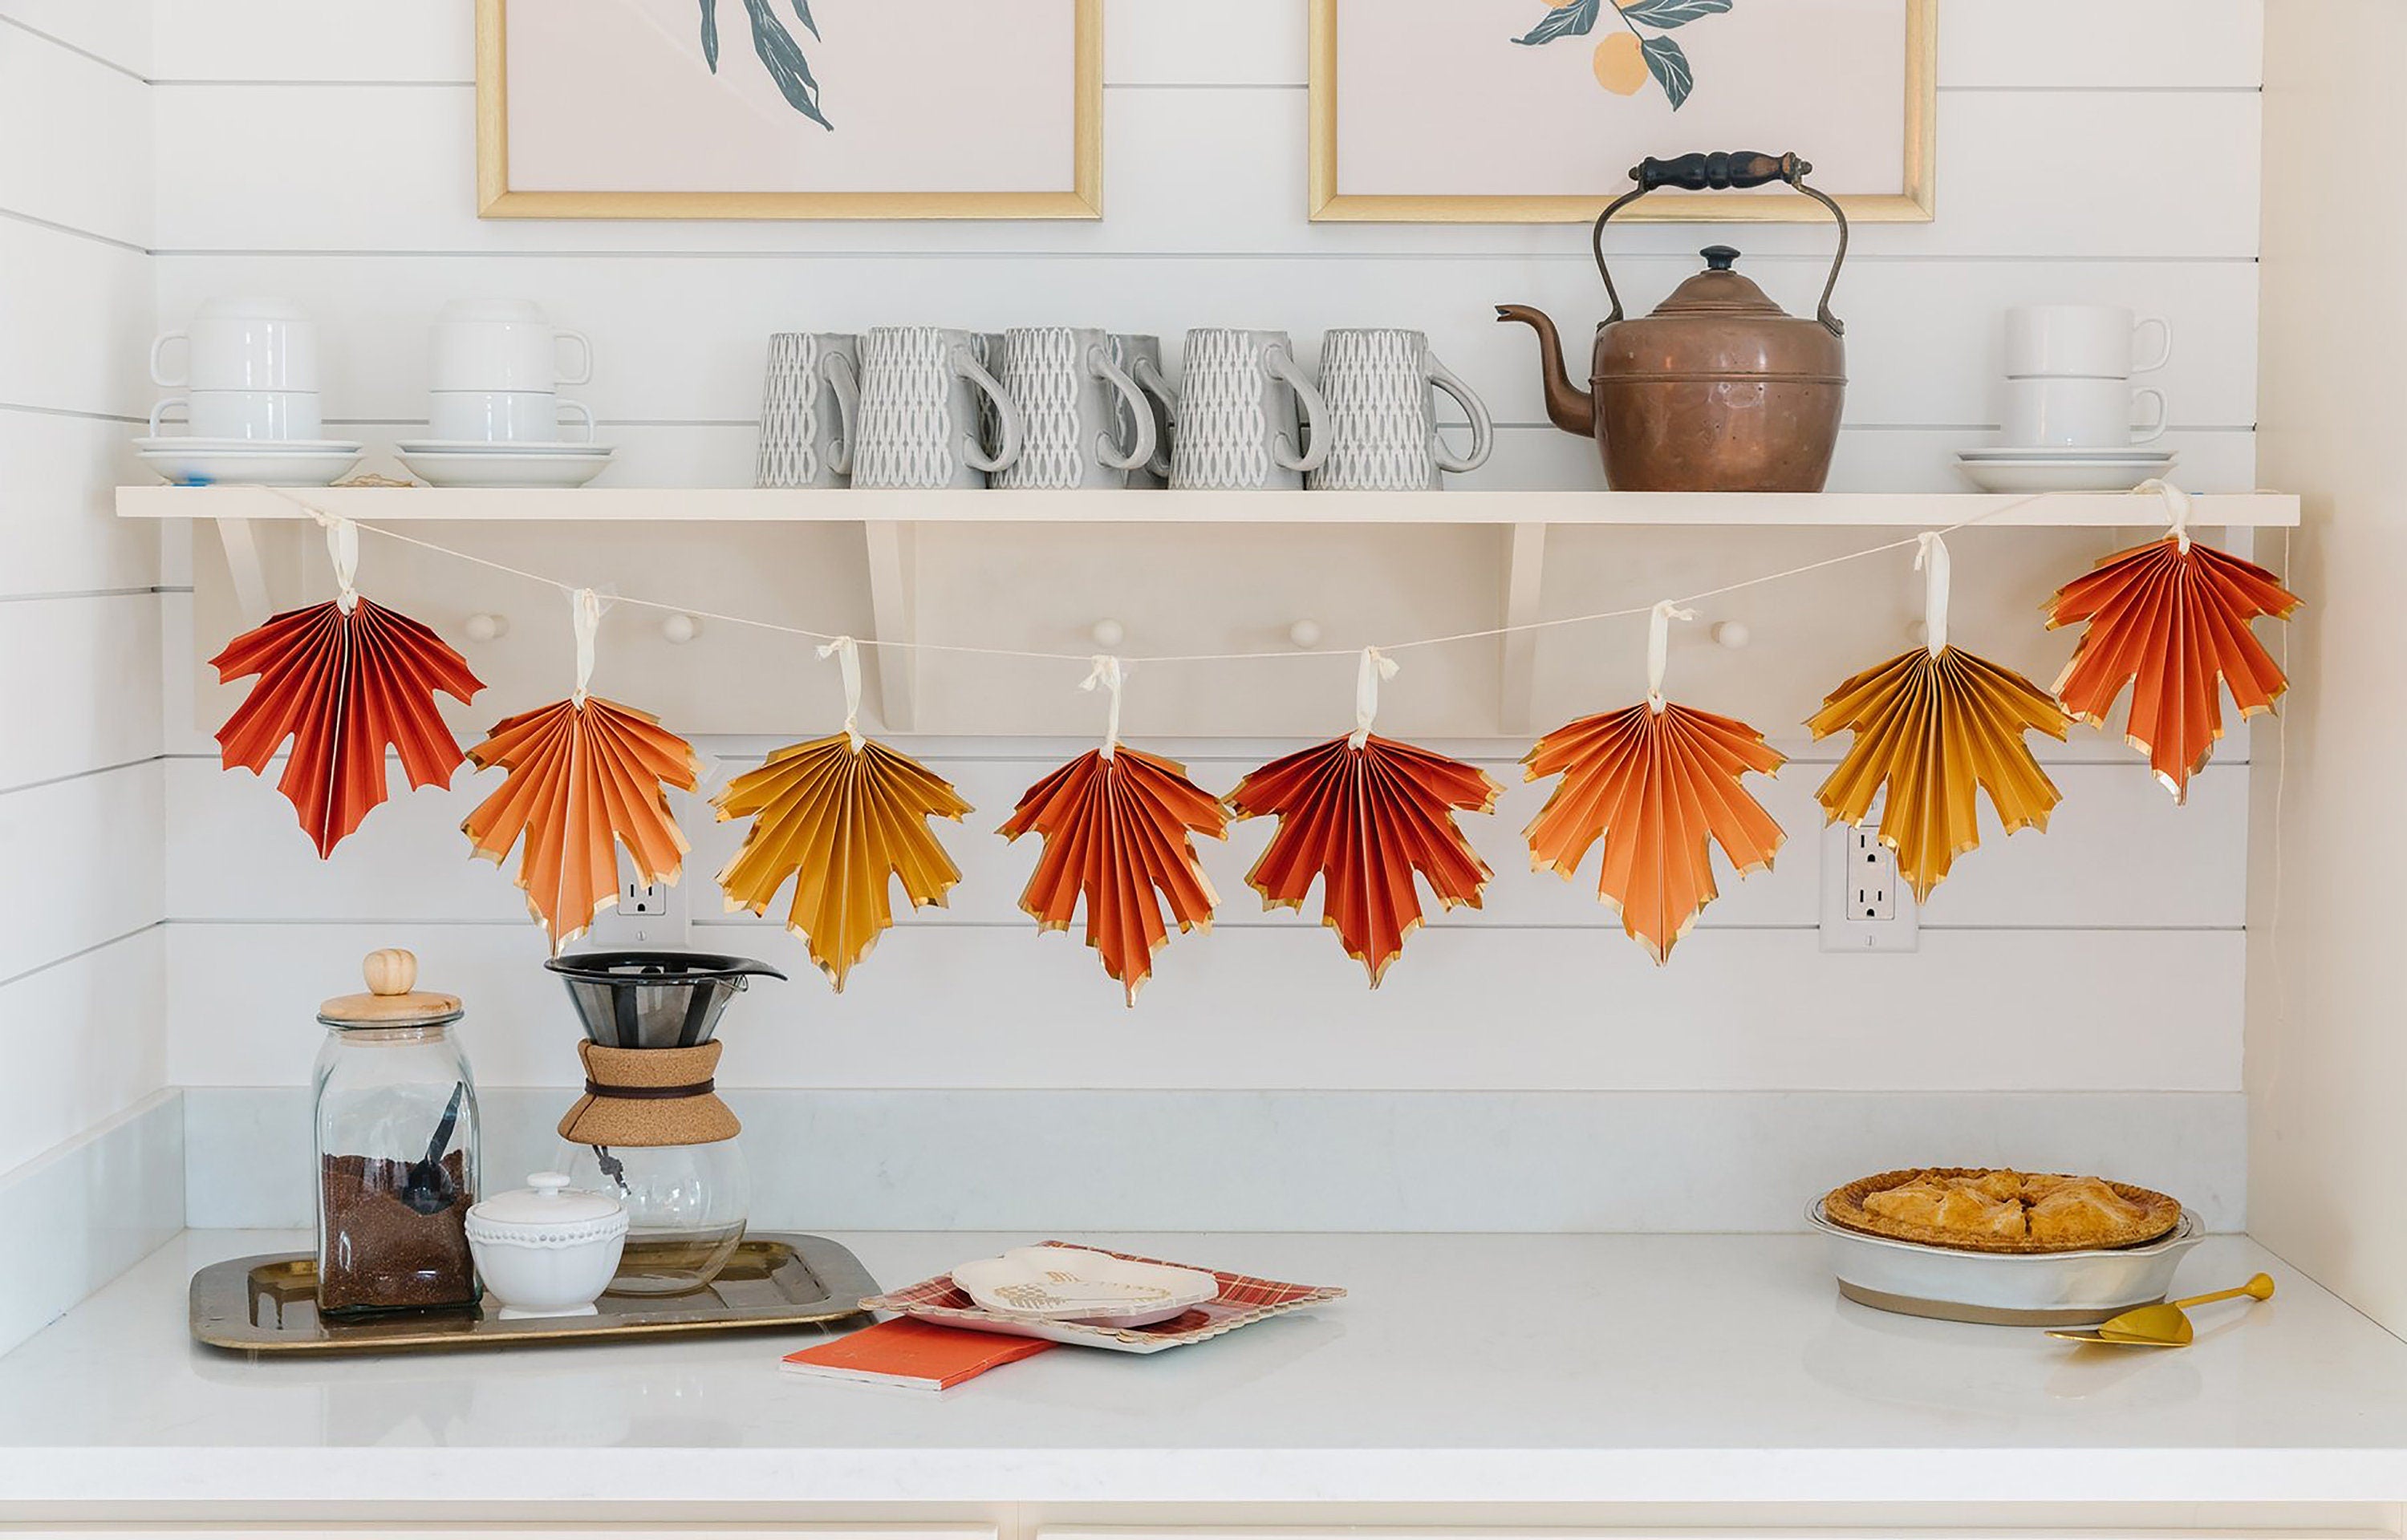 Fall Leaf Banner | Fall Leaf Decorations - Thanksgiving Home Decorations - Fall Home Decor - Autumn Banner - Leaf Decorations